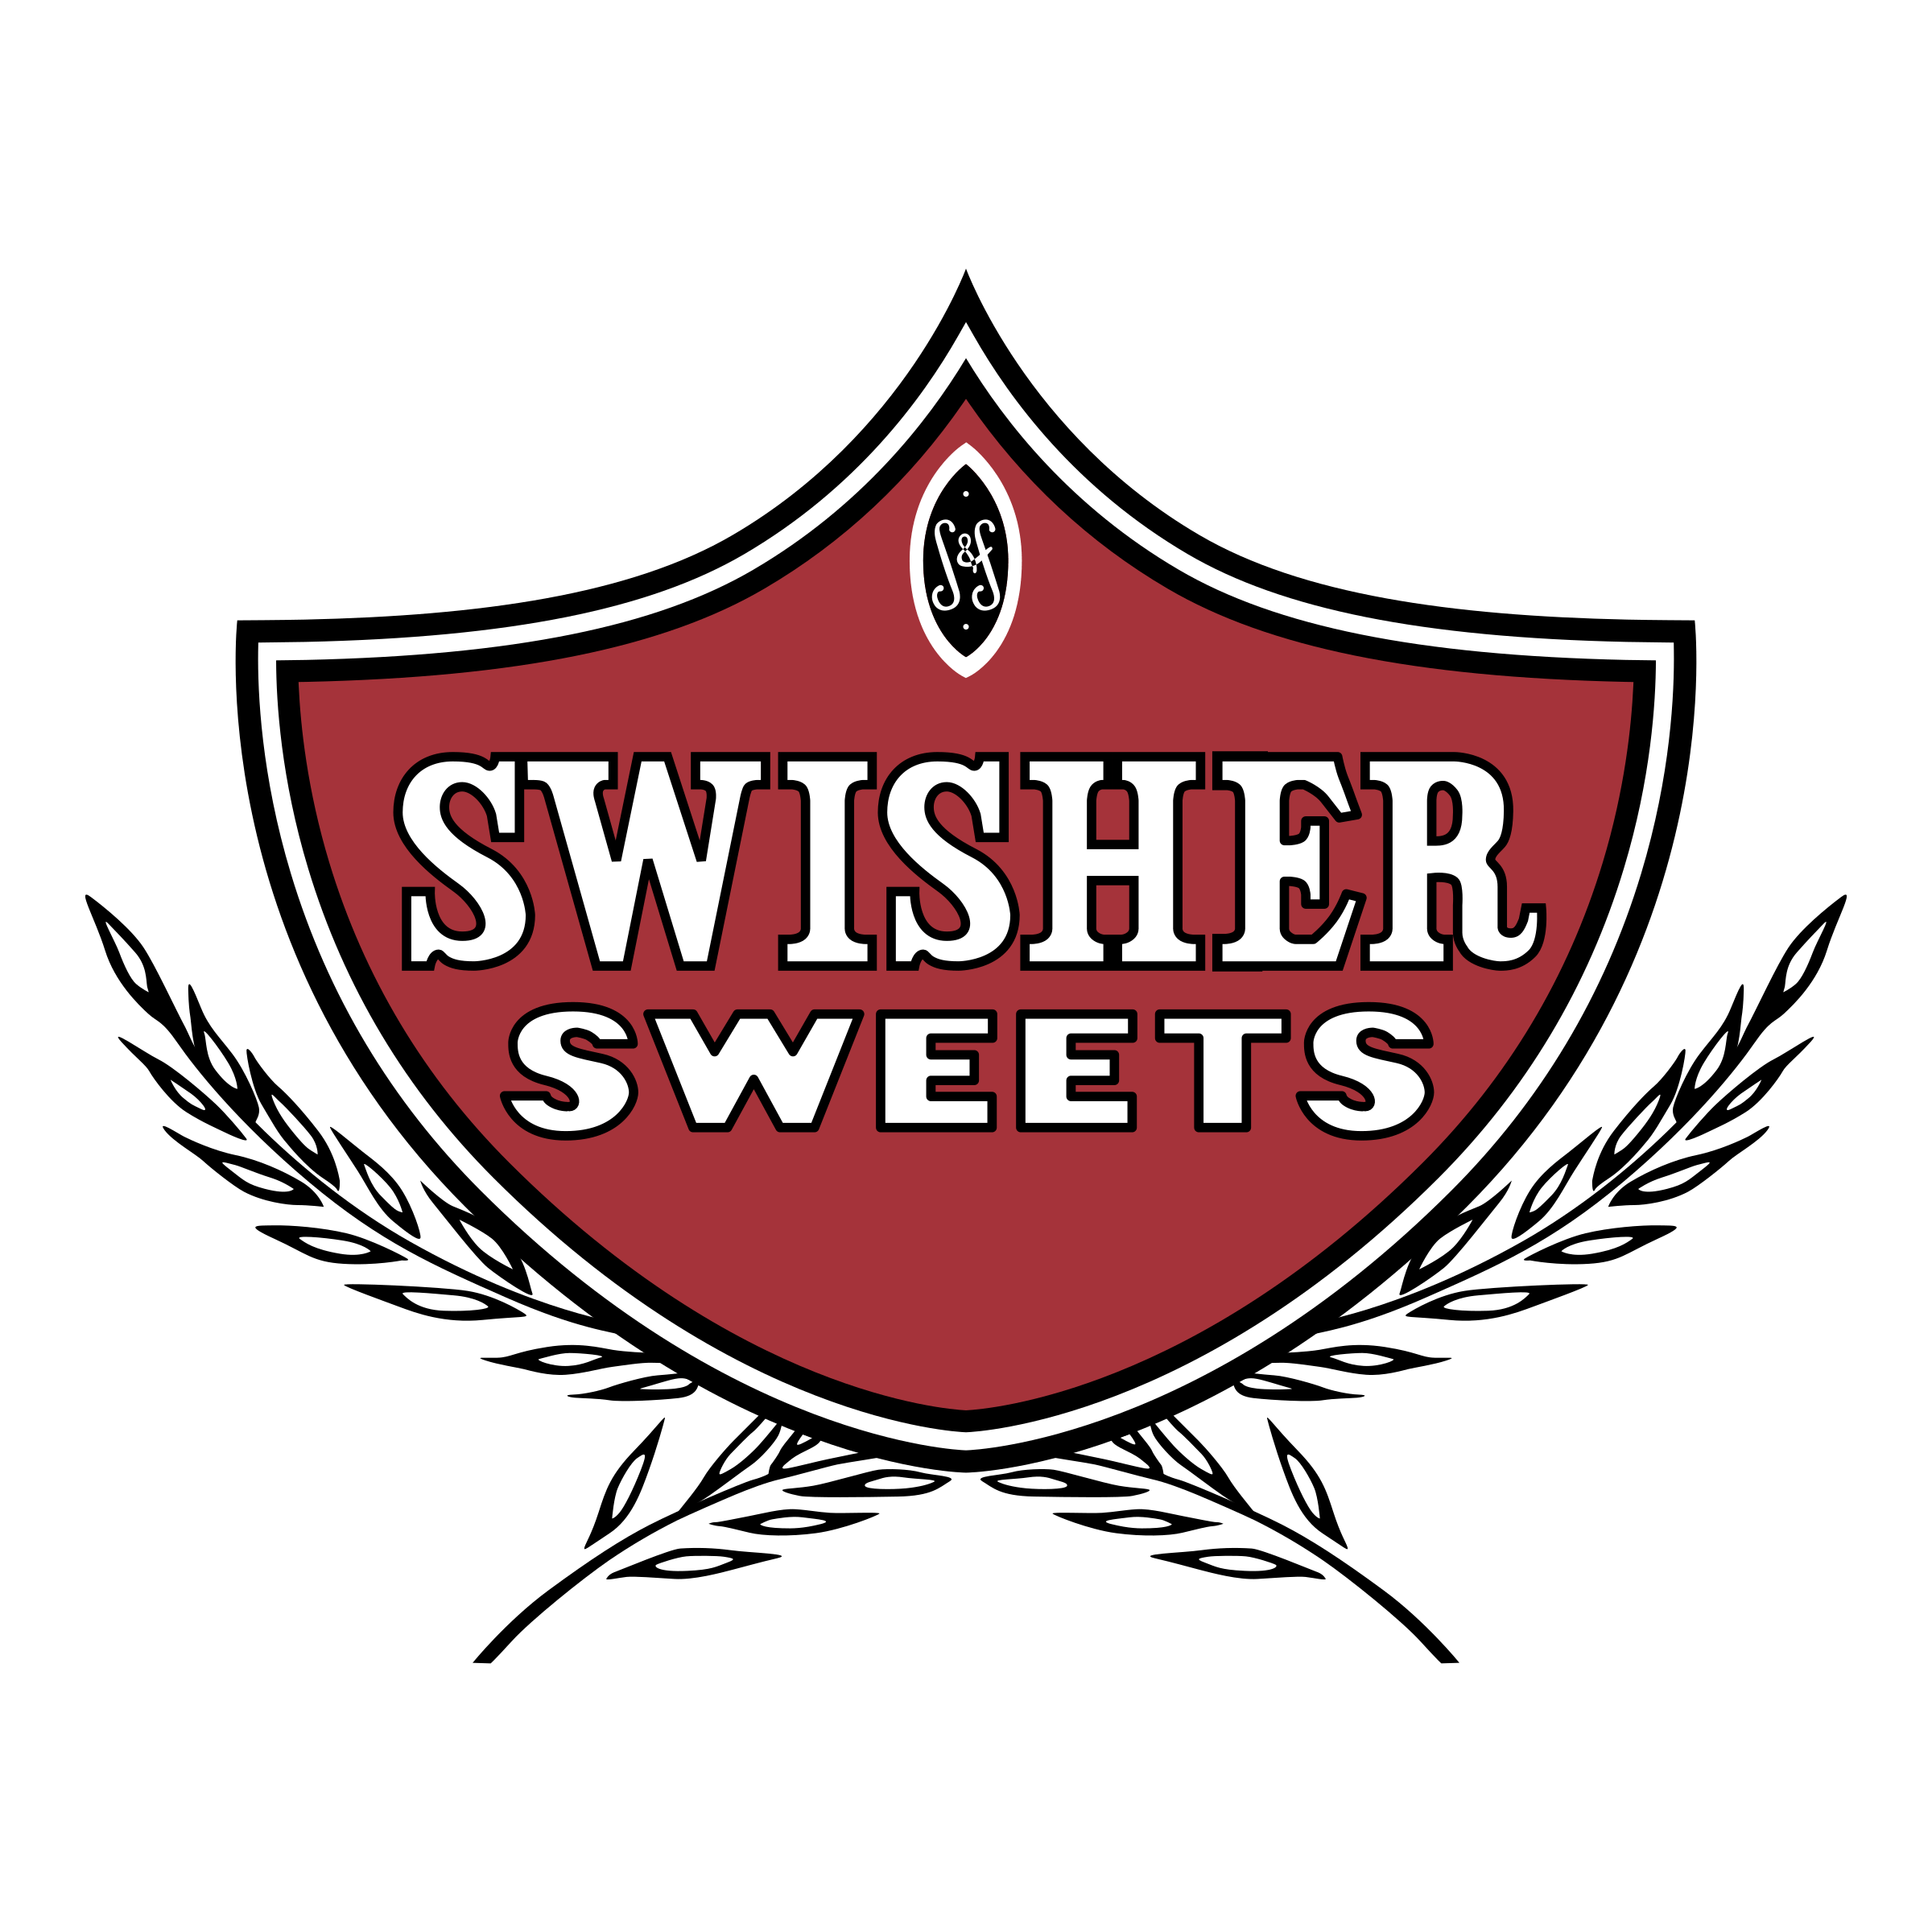 Swisher Logo - Swisher Sweet Logo PNG Transparent & SVG Vector - Freebie Supply